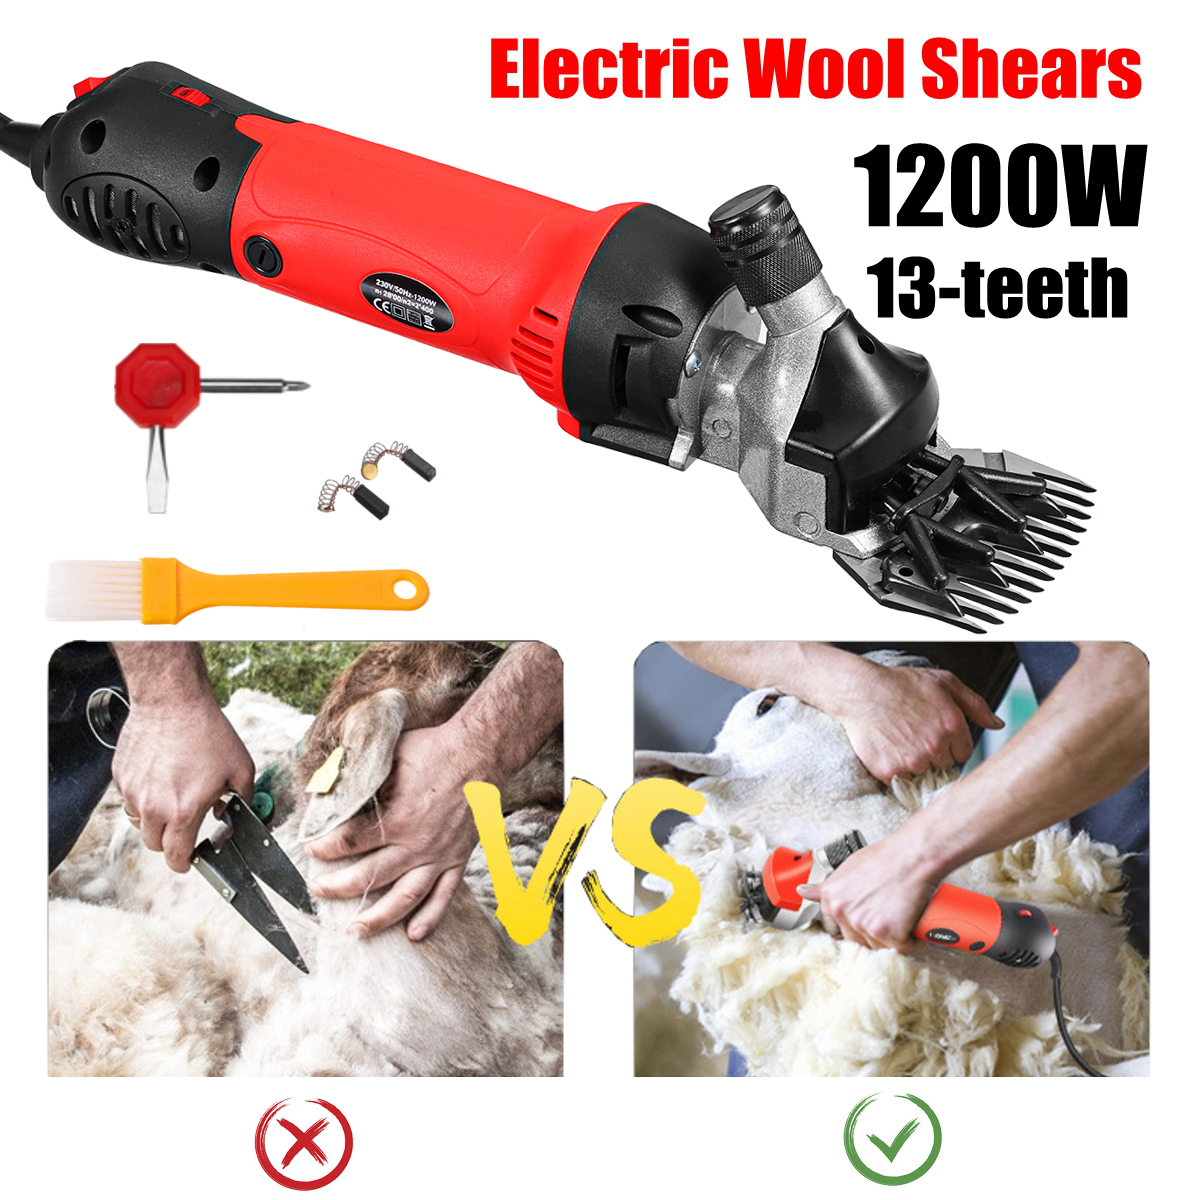 110V220V-13-Teeth-Electric-Wool-Shears-Shearing-Animal-Sheep-Goat-Farm-Machine-1700388-1